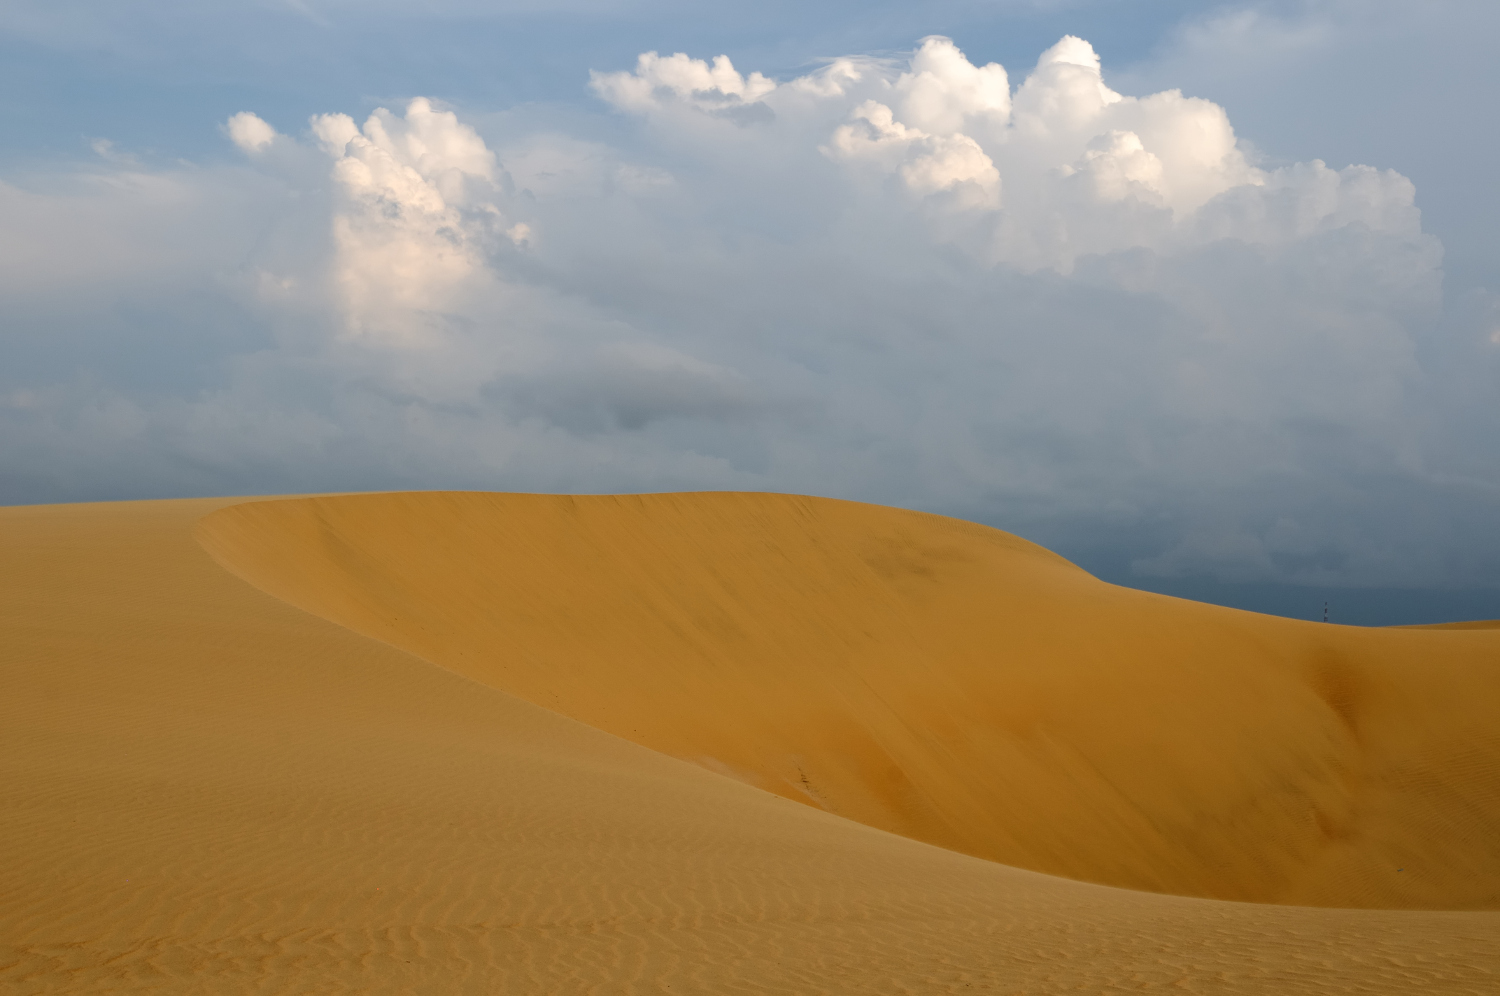 Venezuela - Sand dunes Medanos De Coro National Park near the city of Coro